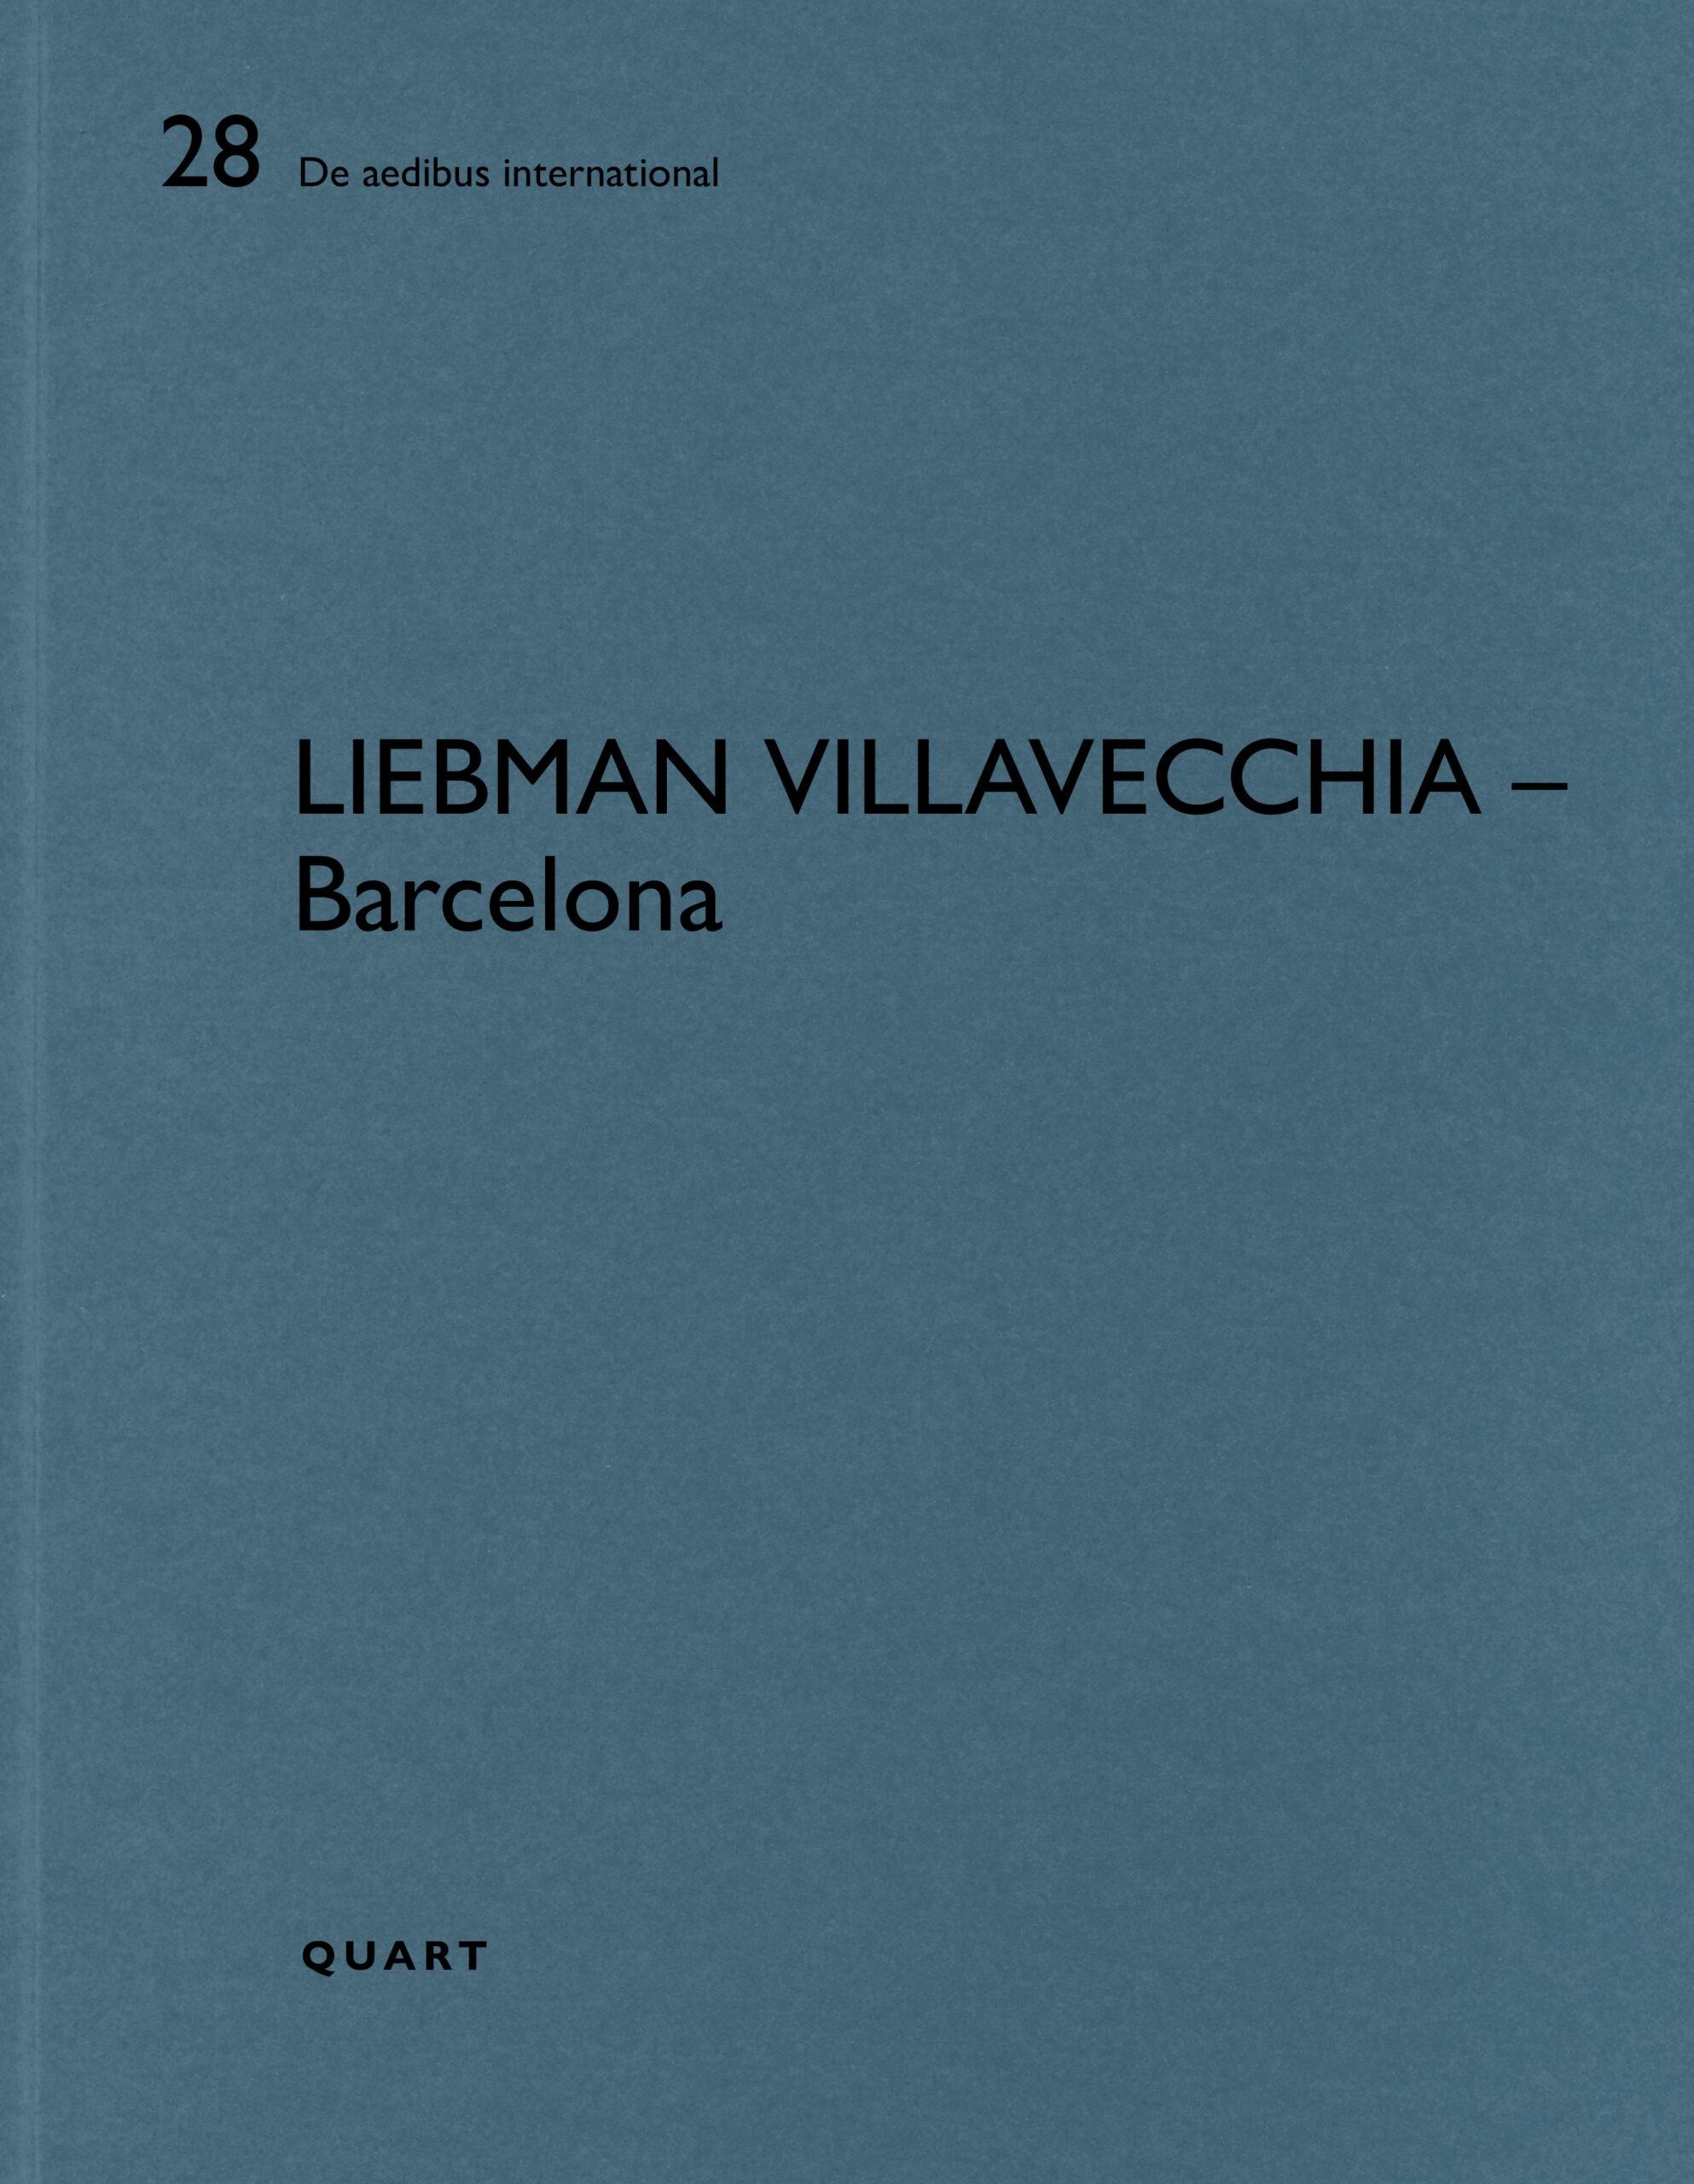 LIEBMAN VILLAVECCHIA - BARCELONA